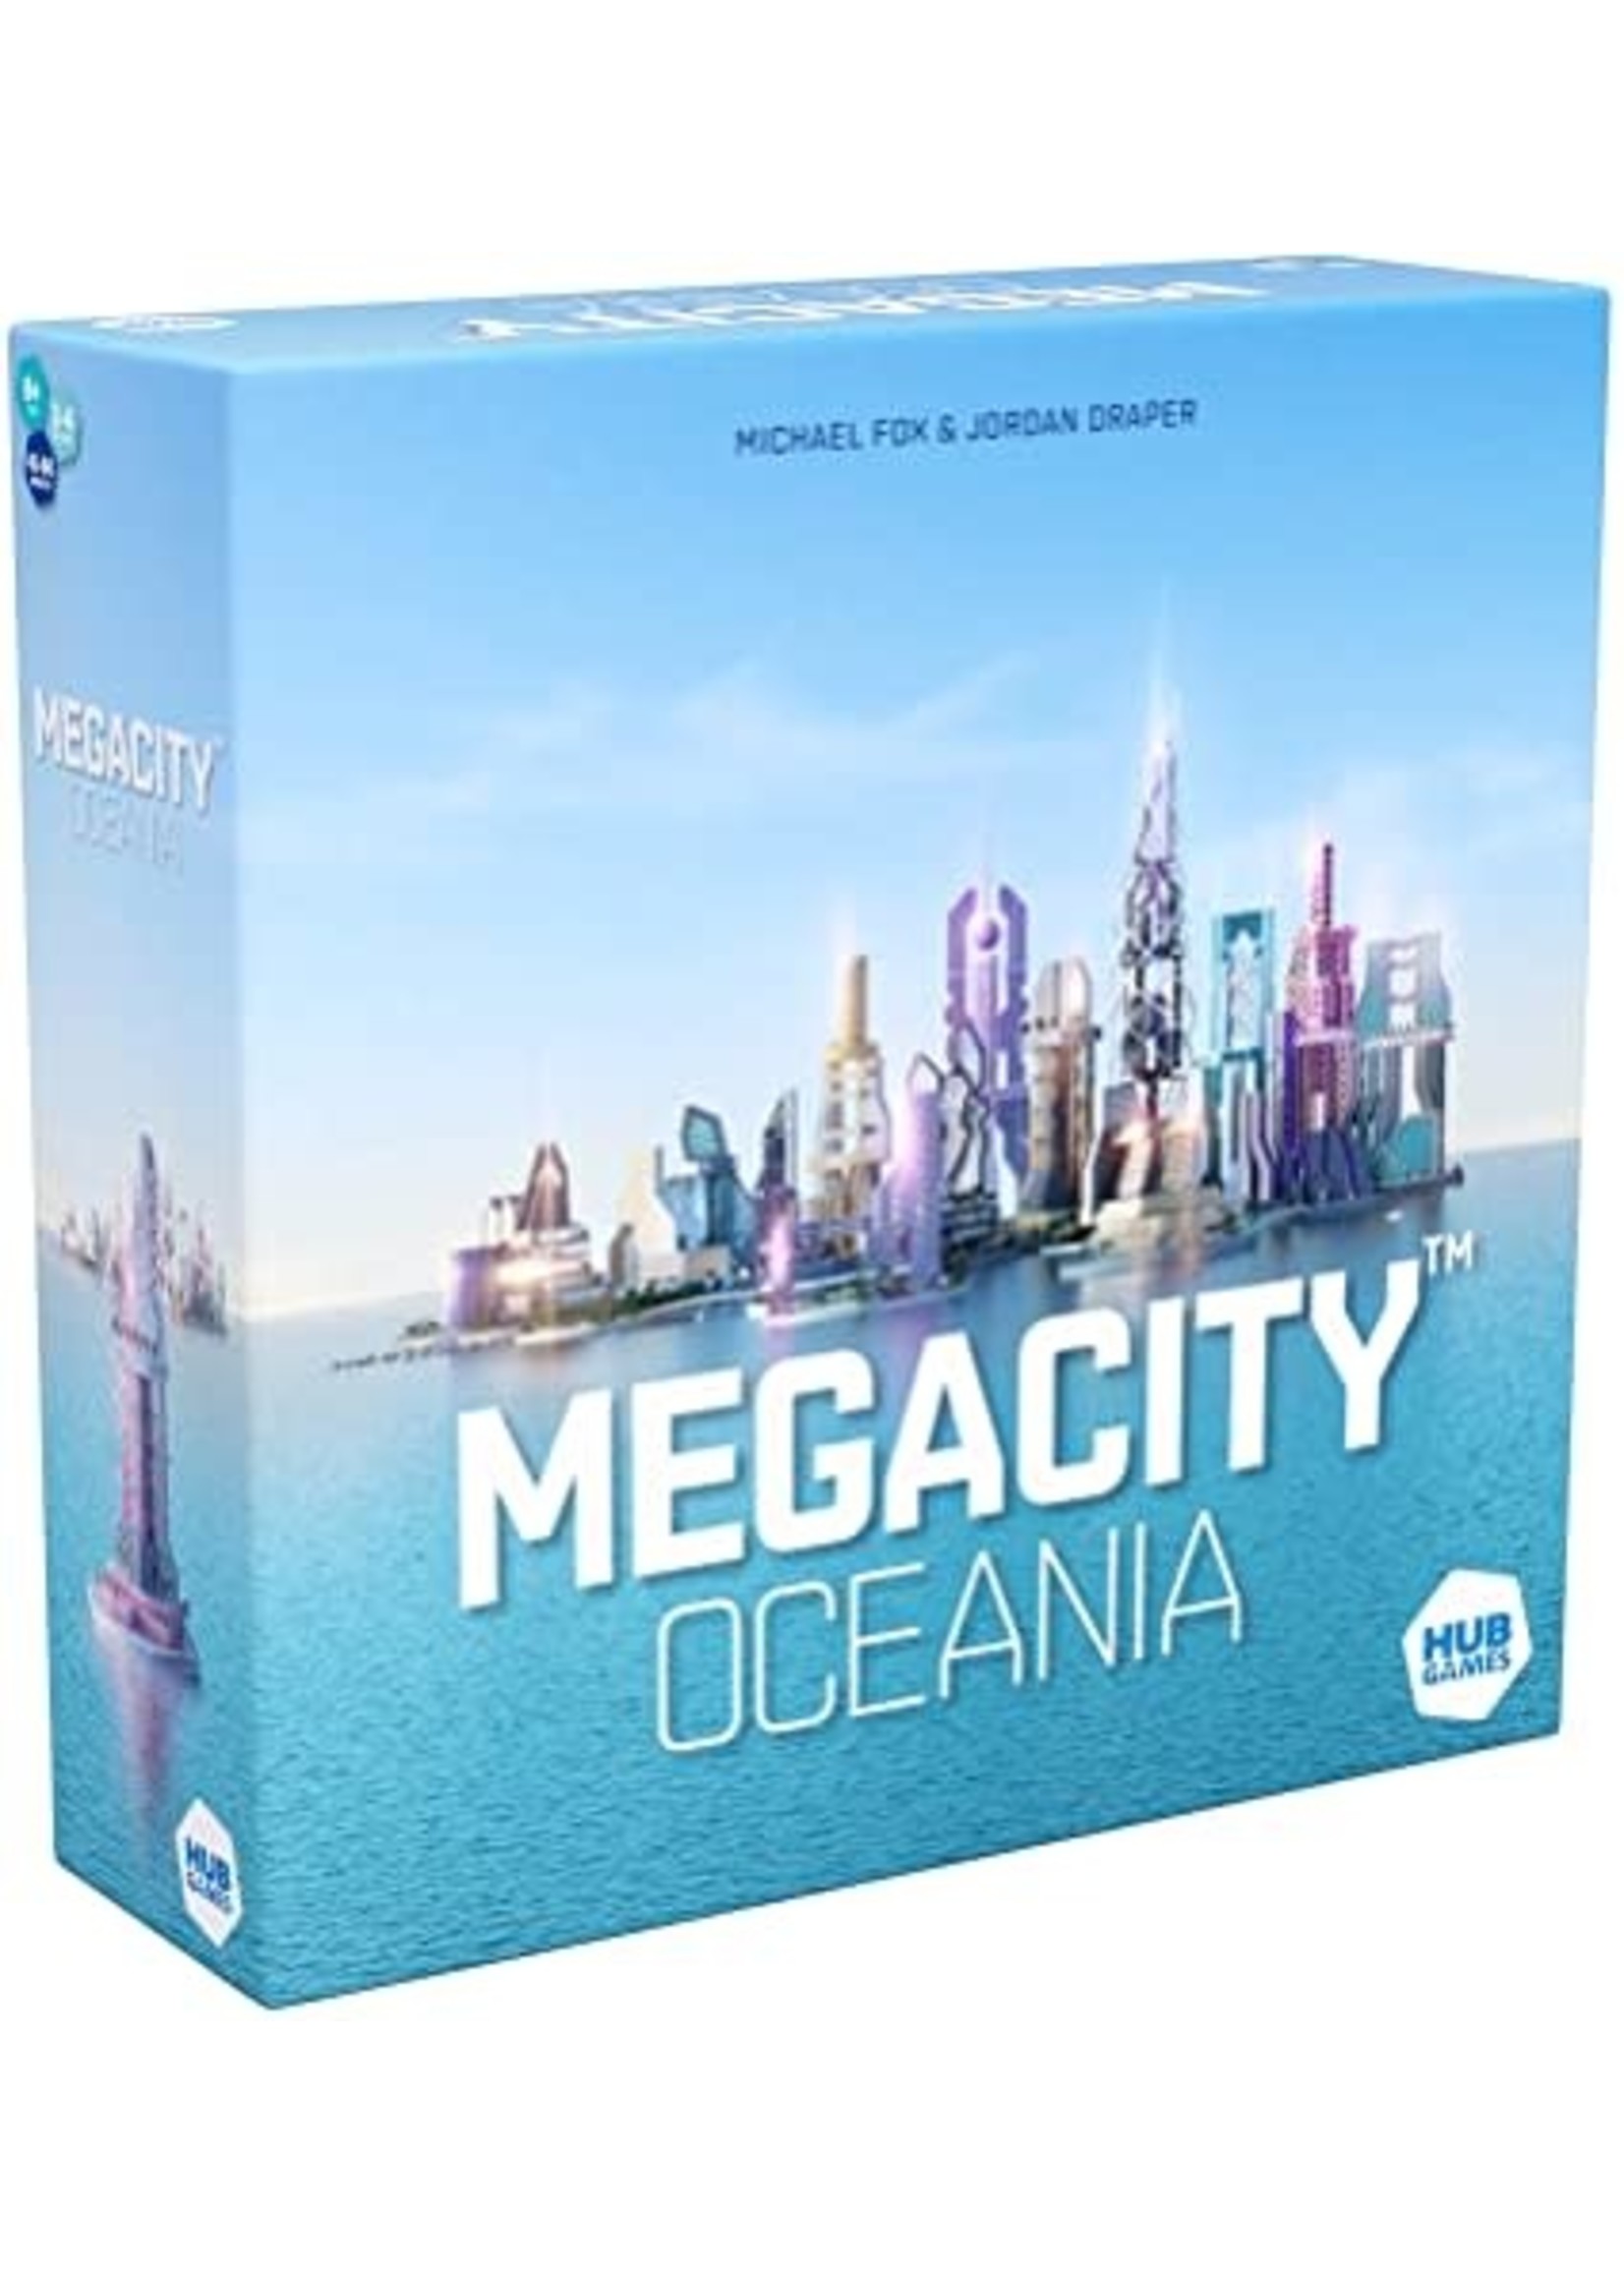 RENTAL - Megacity: Oceania 3 Lb 14.3 oz